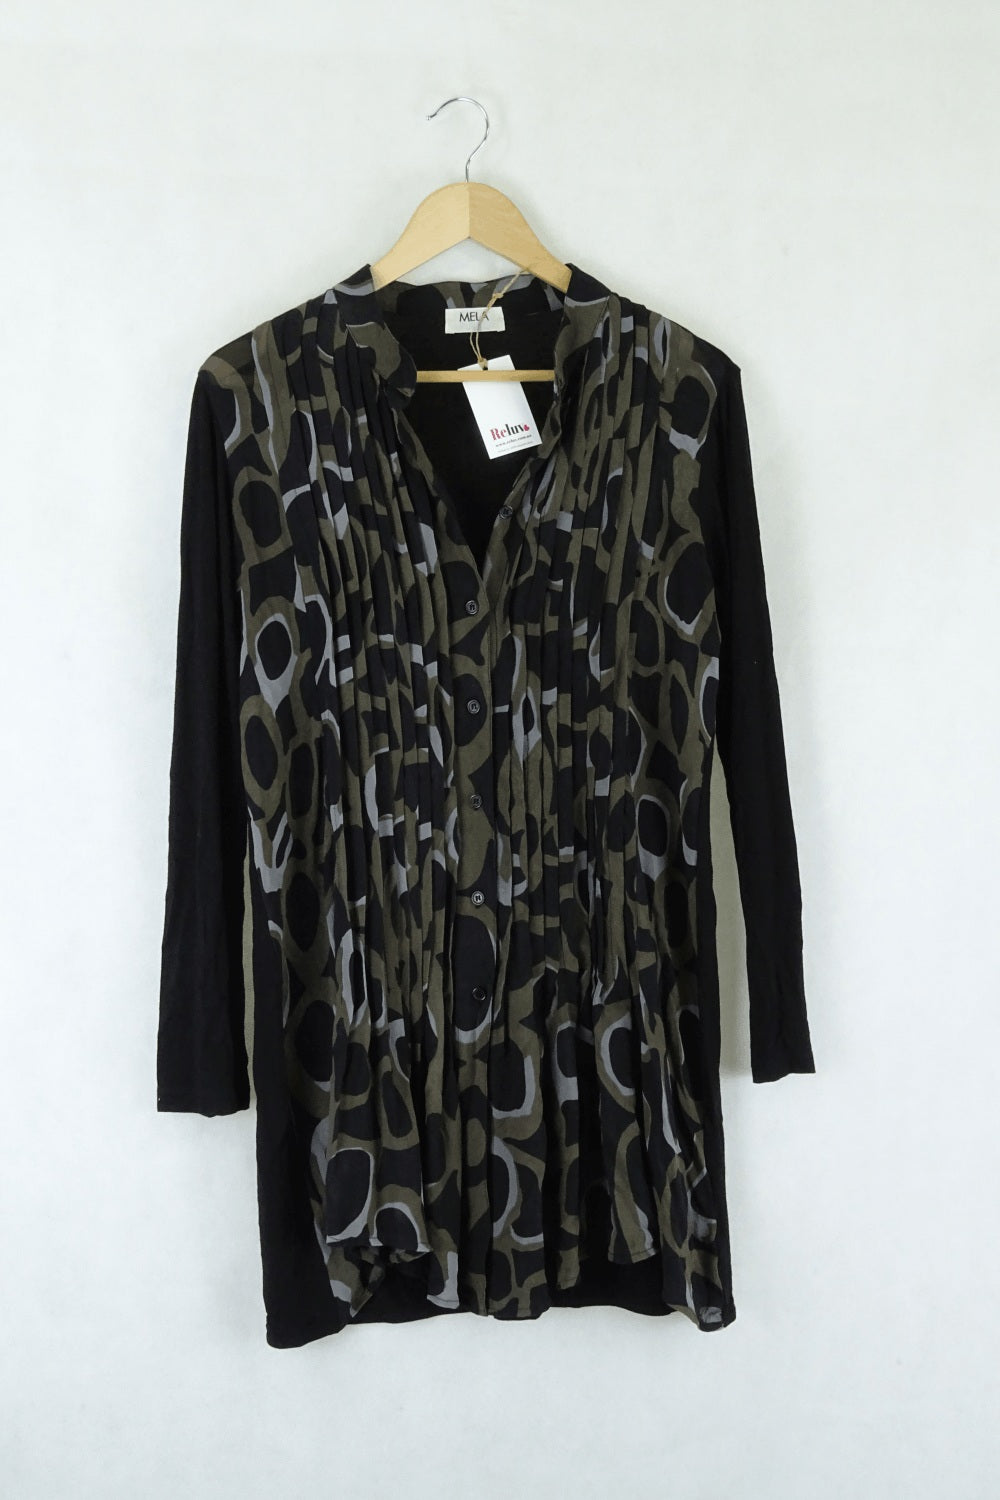 Mela Purdie Black Patterned Short Dress SMall